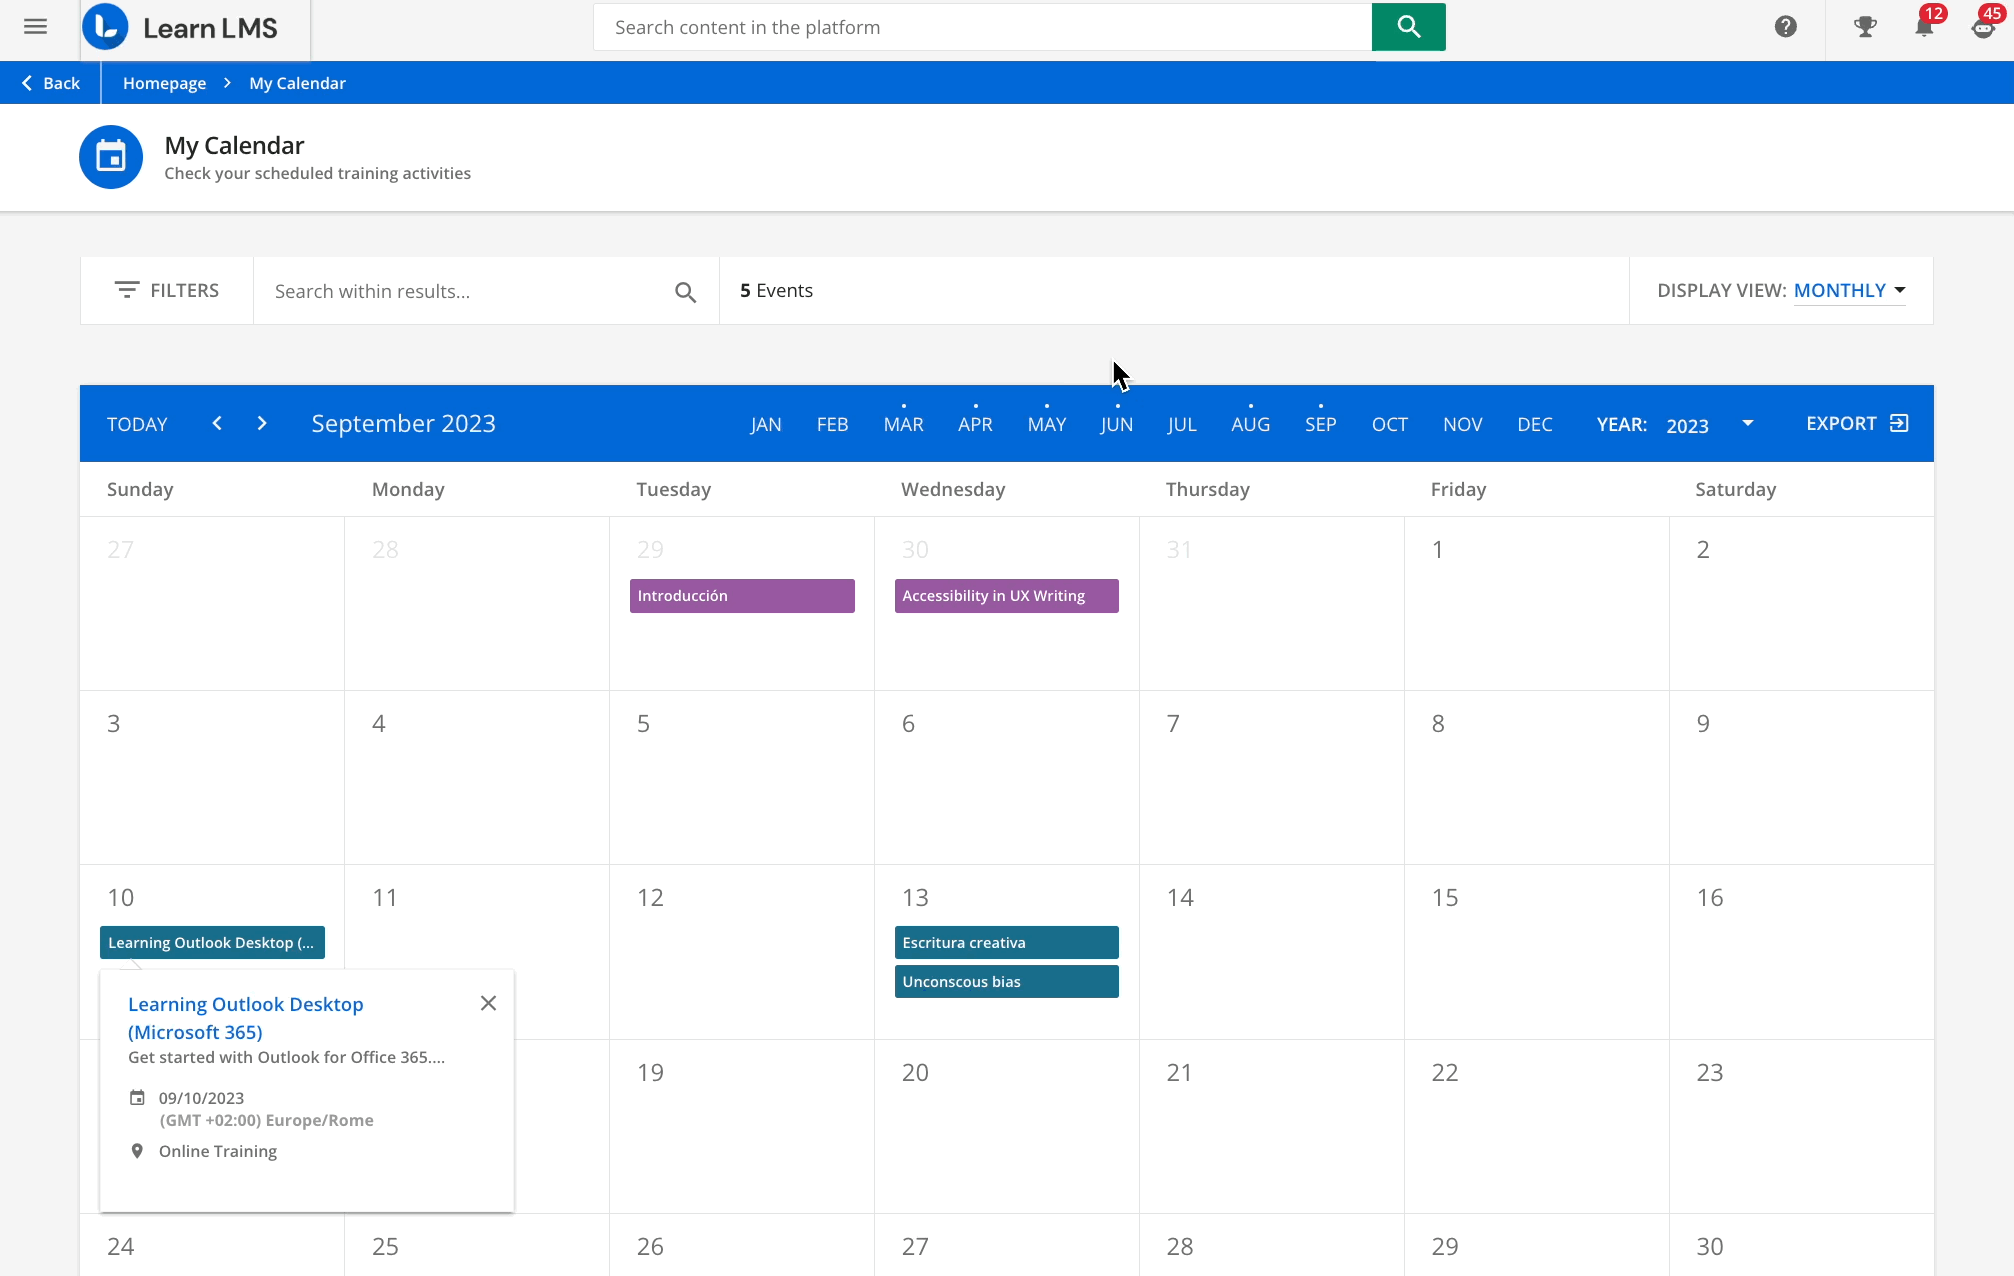 Exporting the platform calendar